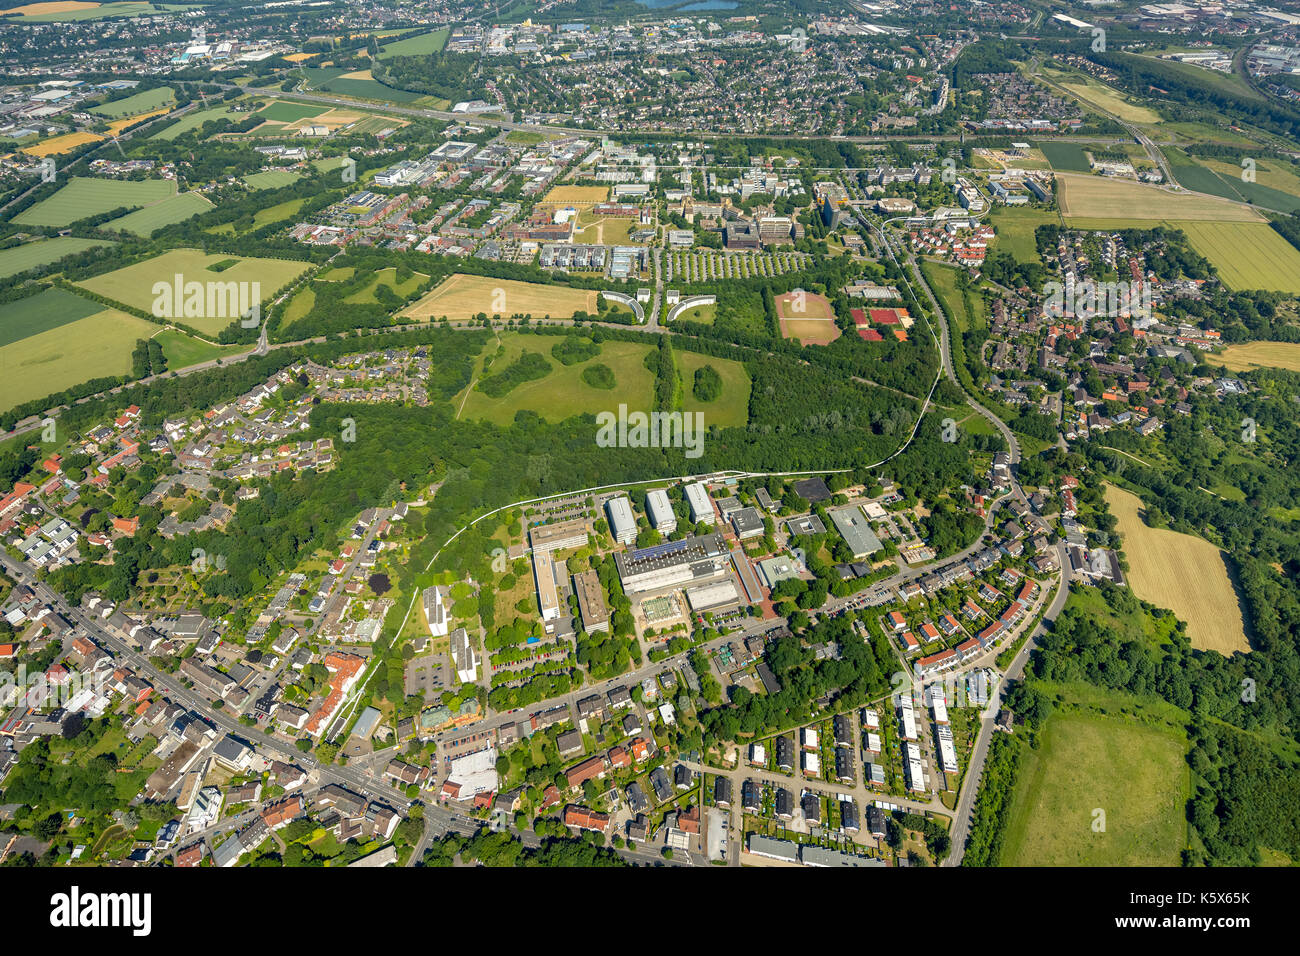 TechnologyParkDortmund on the campus of the University of Dortmund, Dortmund, Ruhr area, North Rhine-Westphalia, Germany Dortmund, Europe, aerial phot Stock Photo